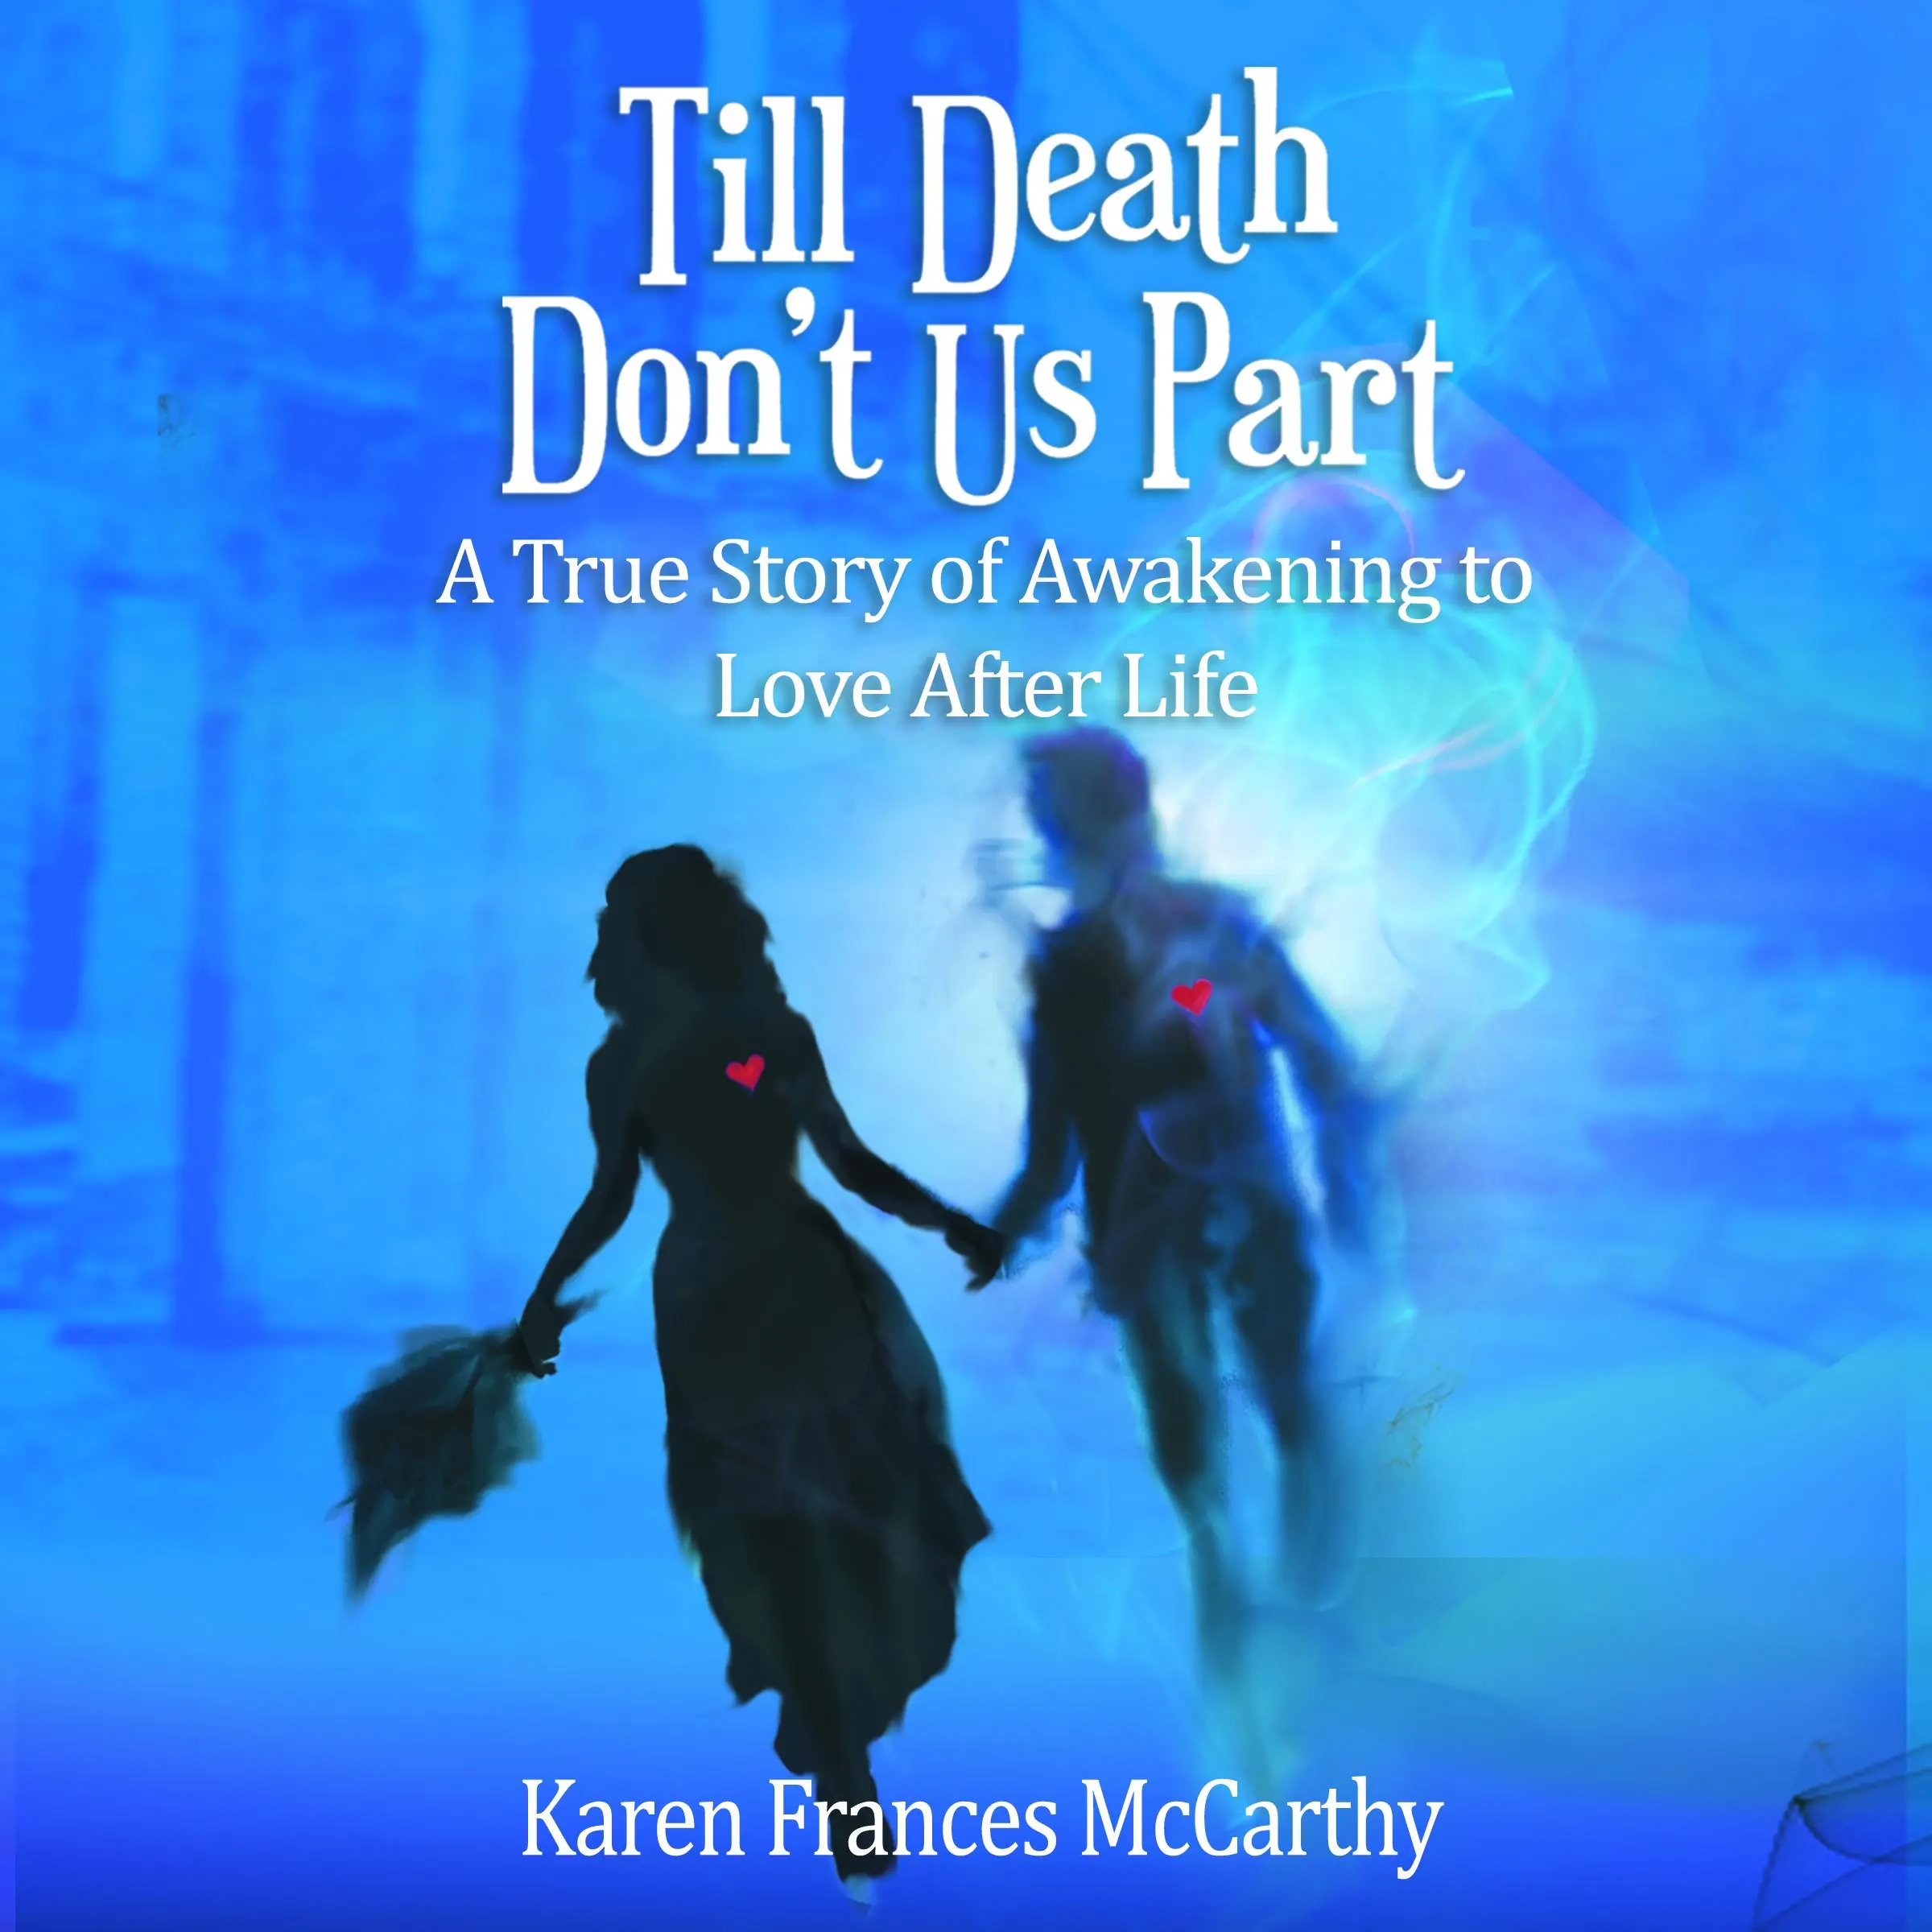 Till Death Don't Us Part Audiobook by Karen Frances McCarthy